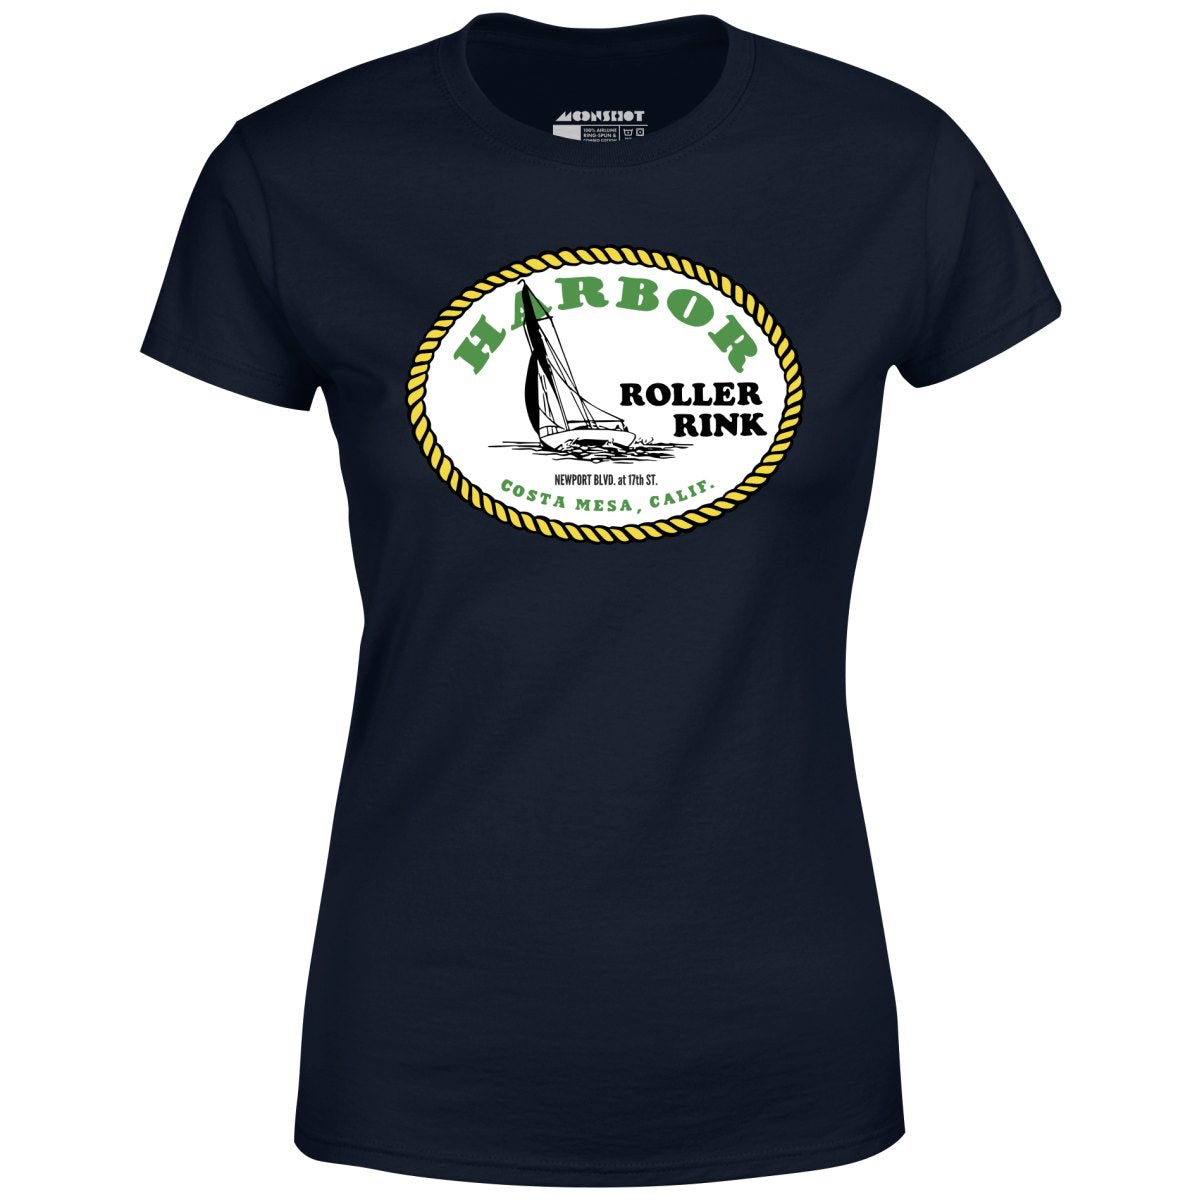 Harbor Roller Rink - Costa Mesa, CA - Vintage Roller Rink - Women's T-Shirt